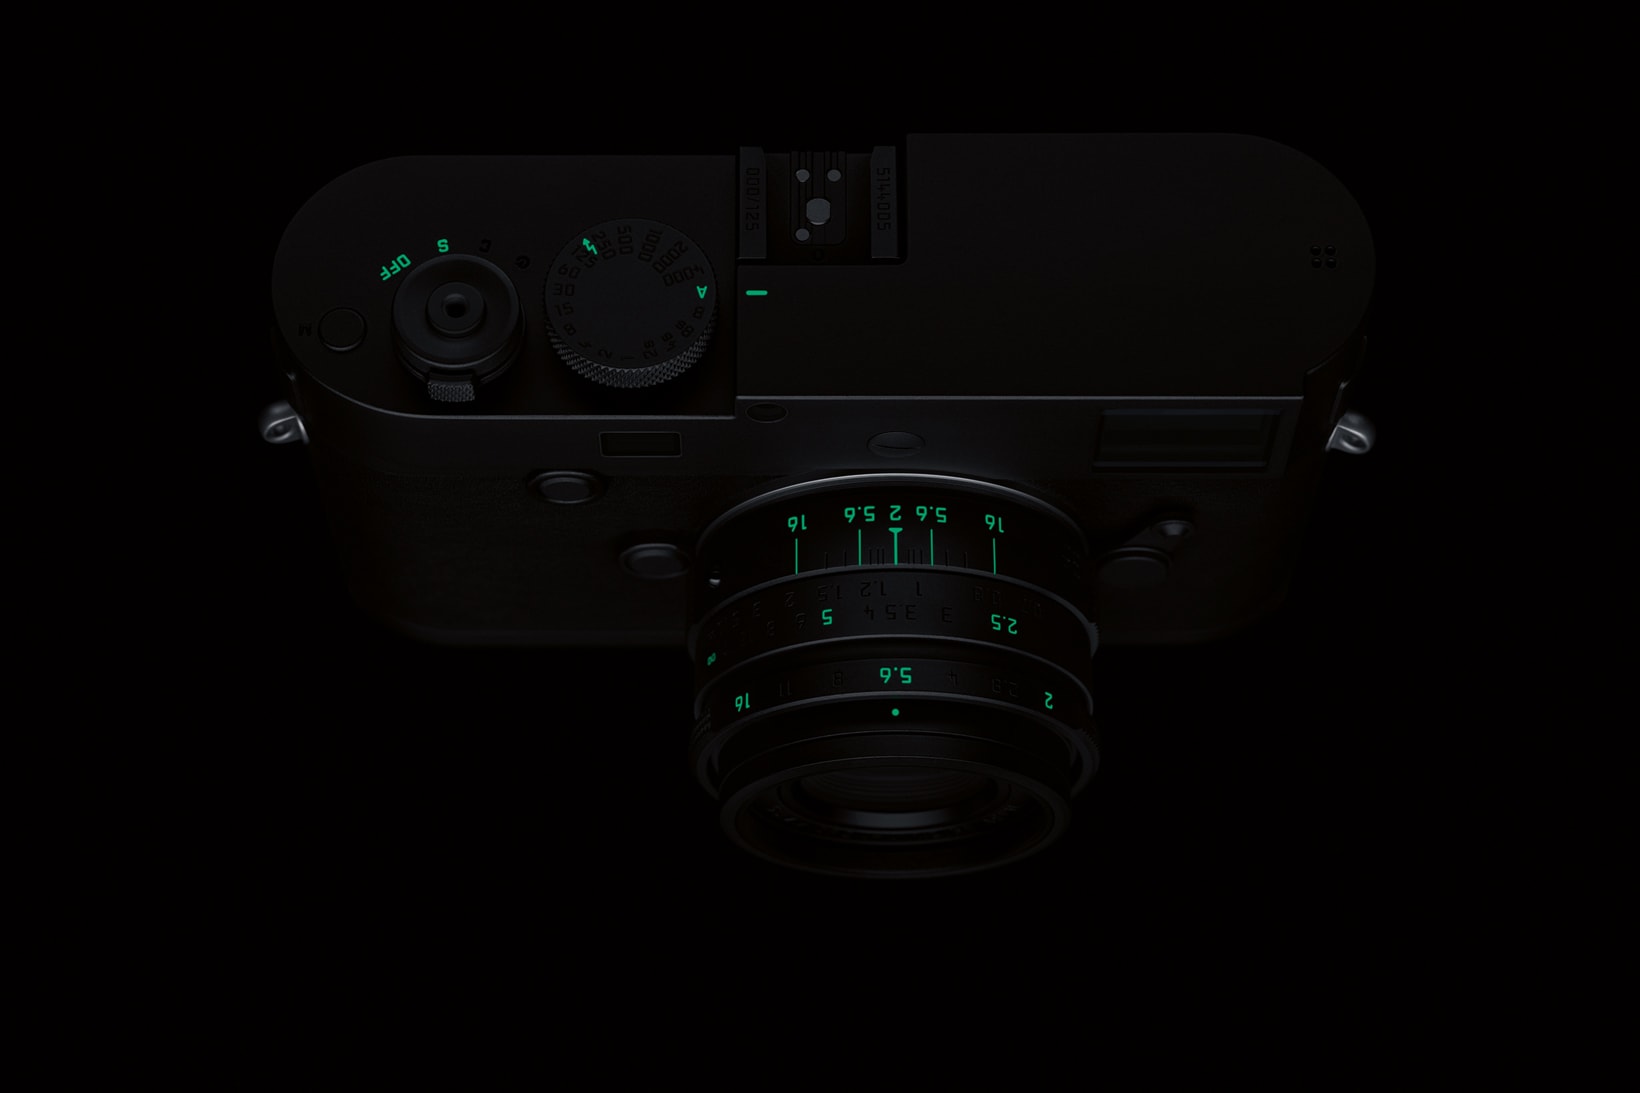 Leica Stealth Edition M Monochrom Camera 15750 usd 125 glow in the dark exclusive limited rag bone marcus wainwright matte black green